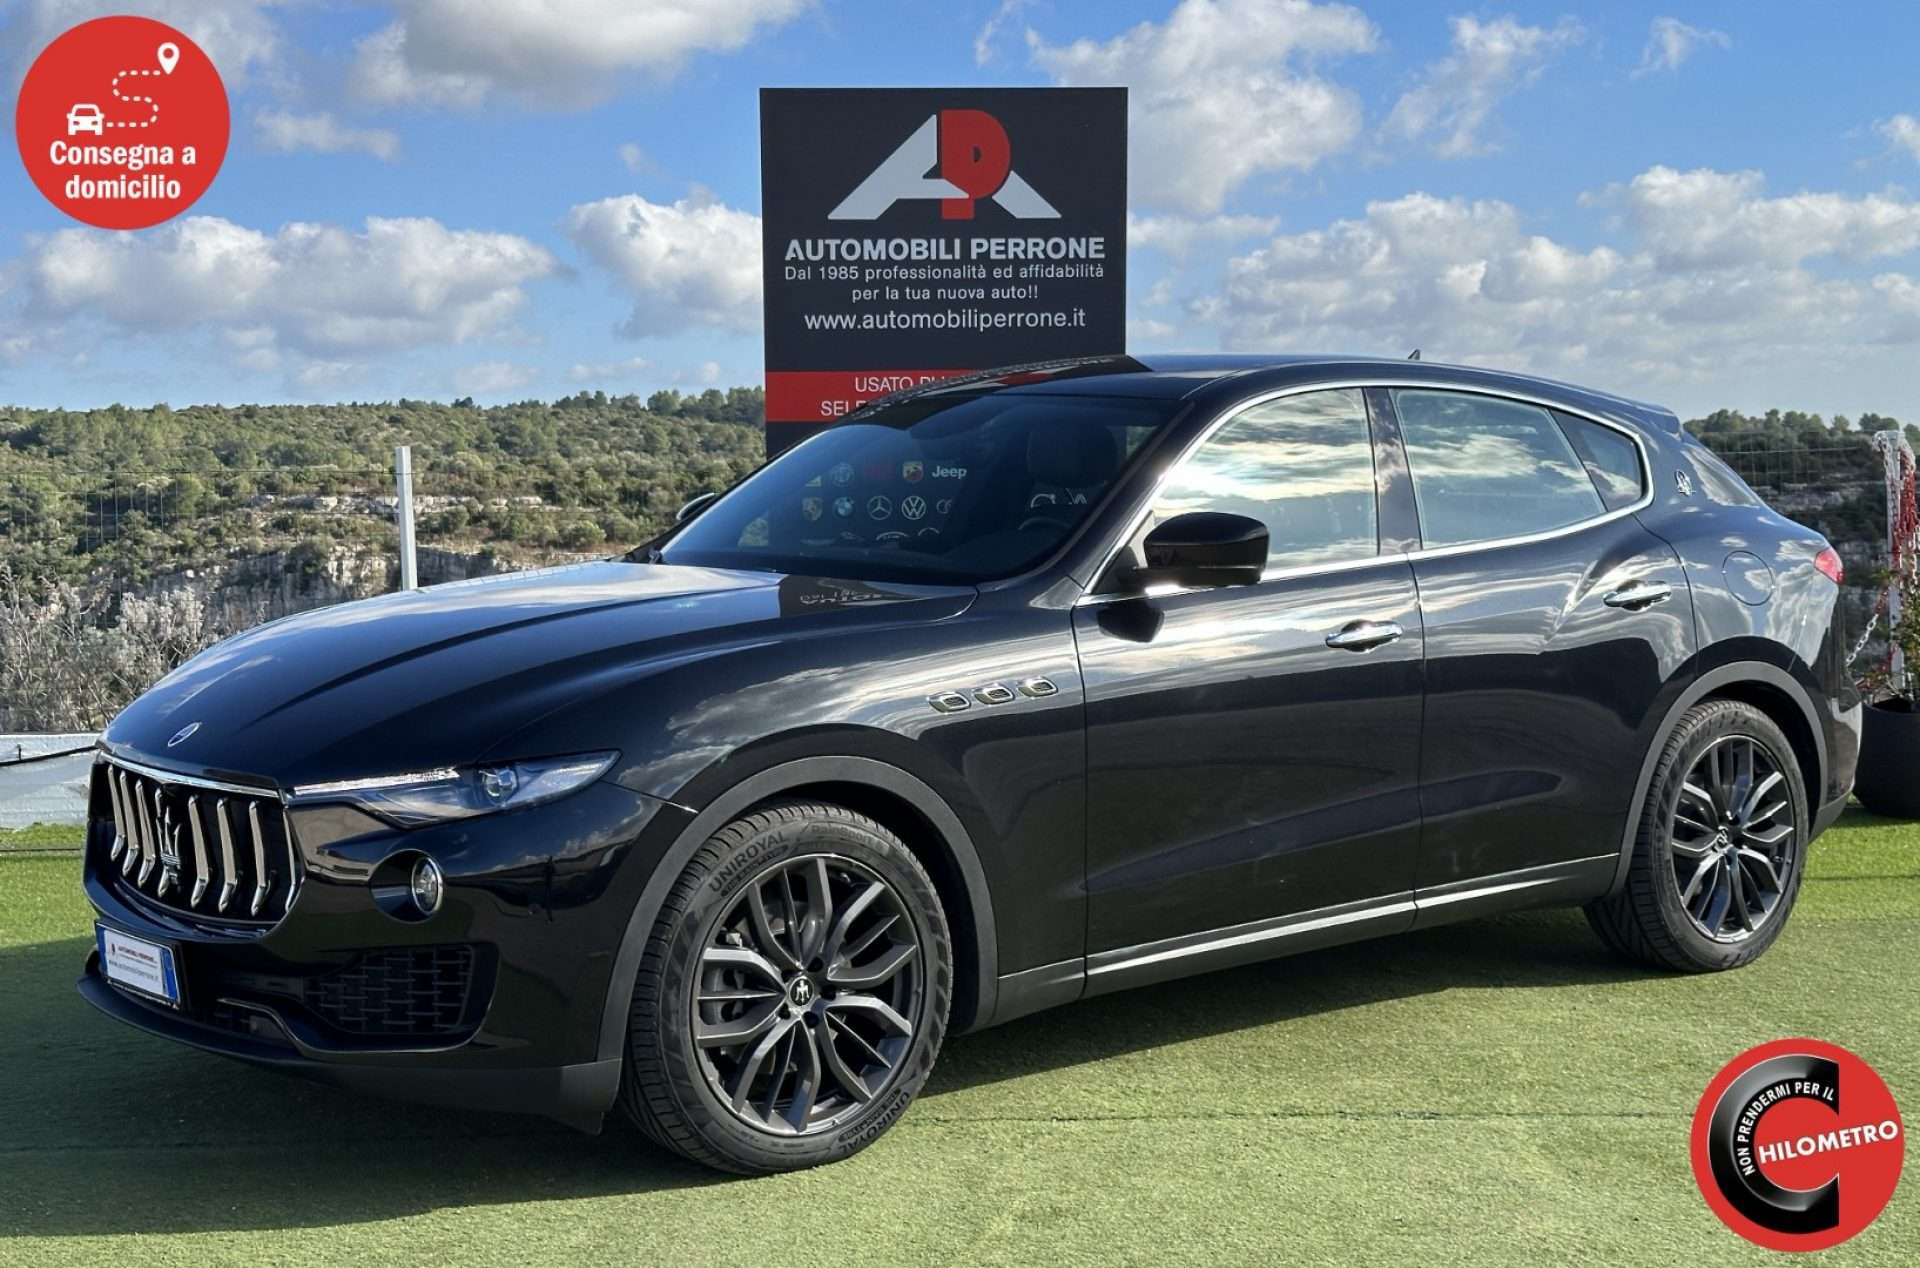 Maserati Levante Off-Road/Pick-up in Black used in Castellaneta - Taranto - Ta for € 52,800.-